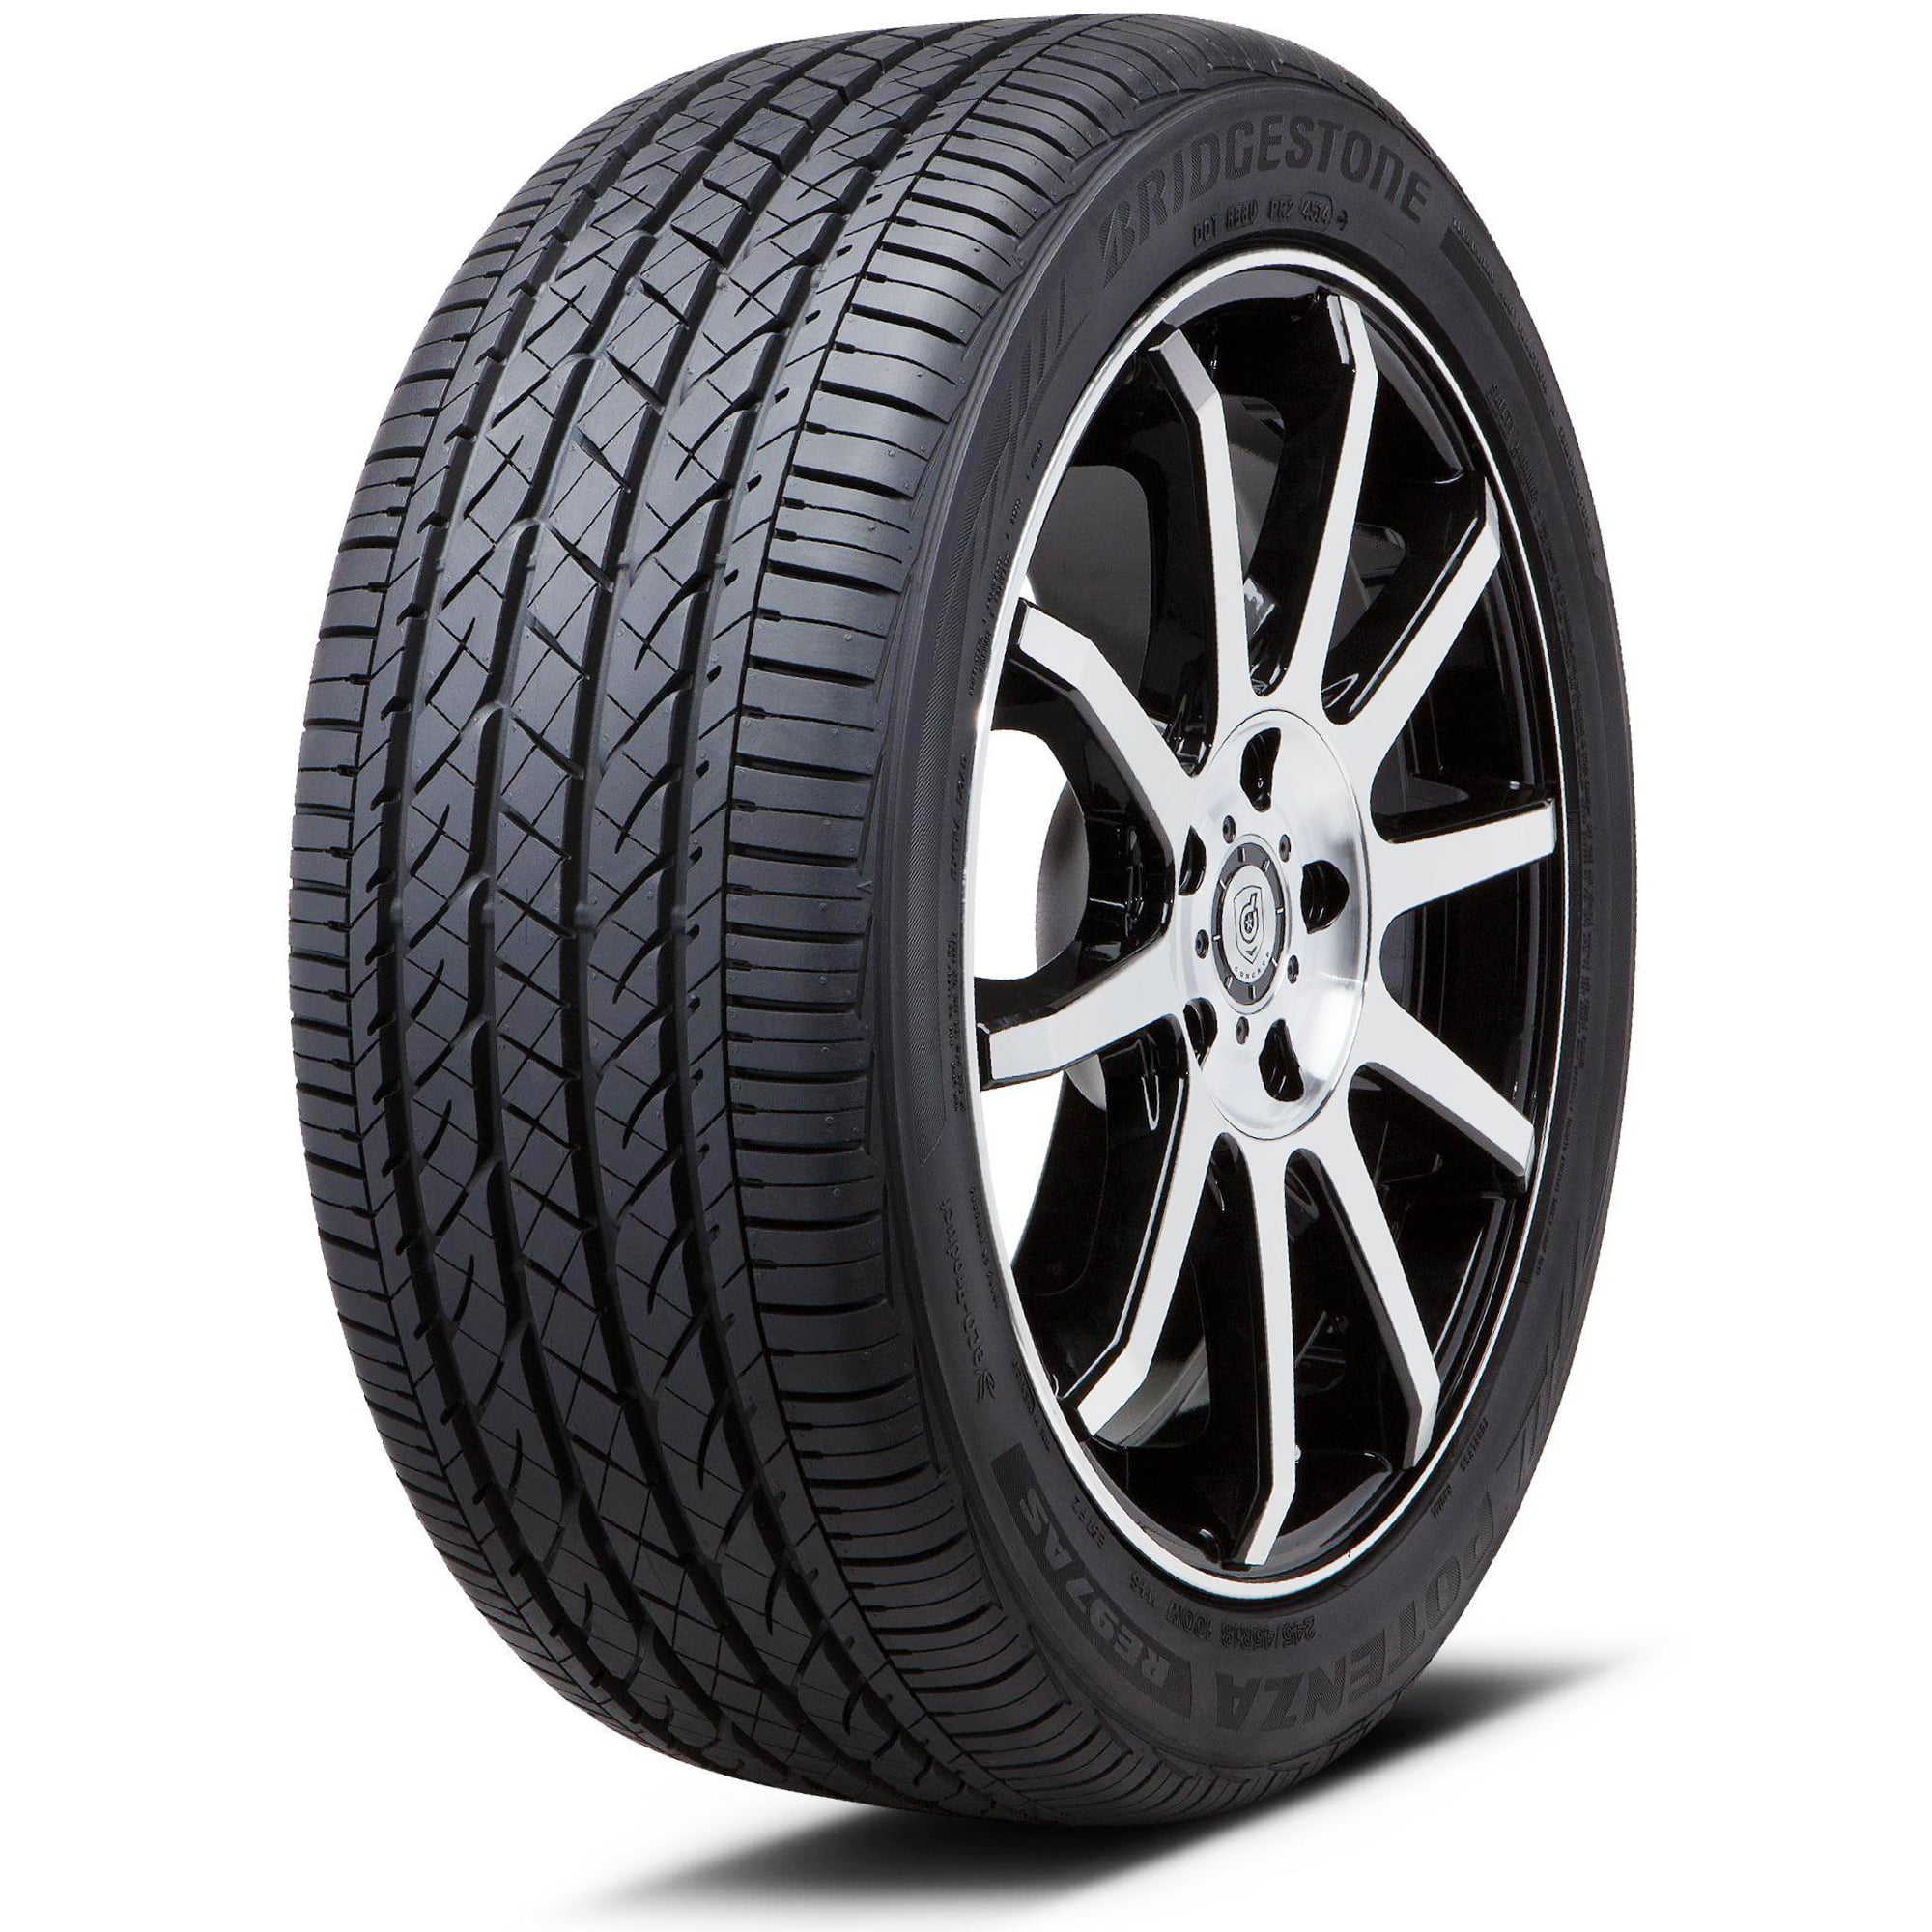 Bridgestone Potenza RE97AS 215/60R16 95 V Tire - Walmart.com